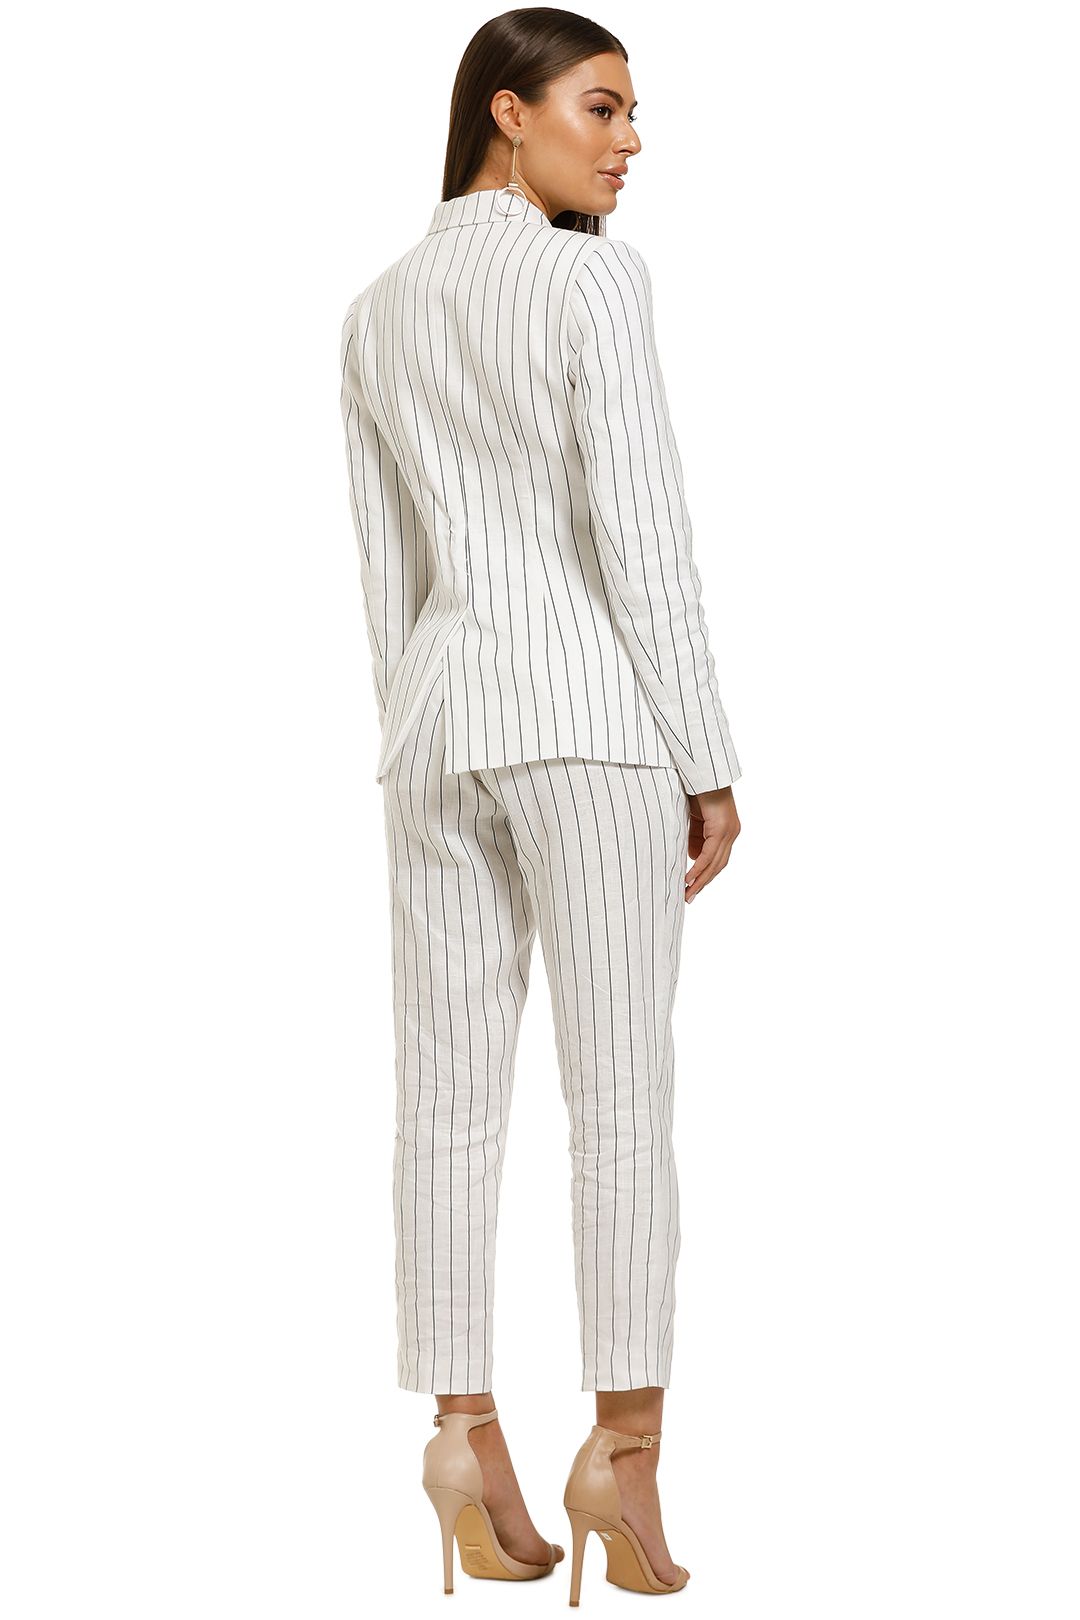 FWRD-The-Label-Cecilia-Jacket-and-Pant-Set-Black-White-Stripe-Back